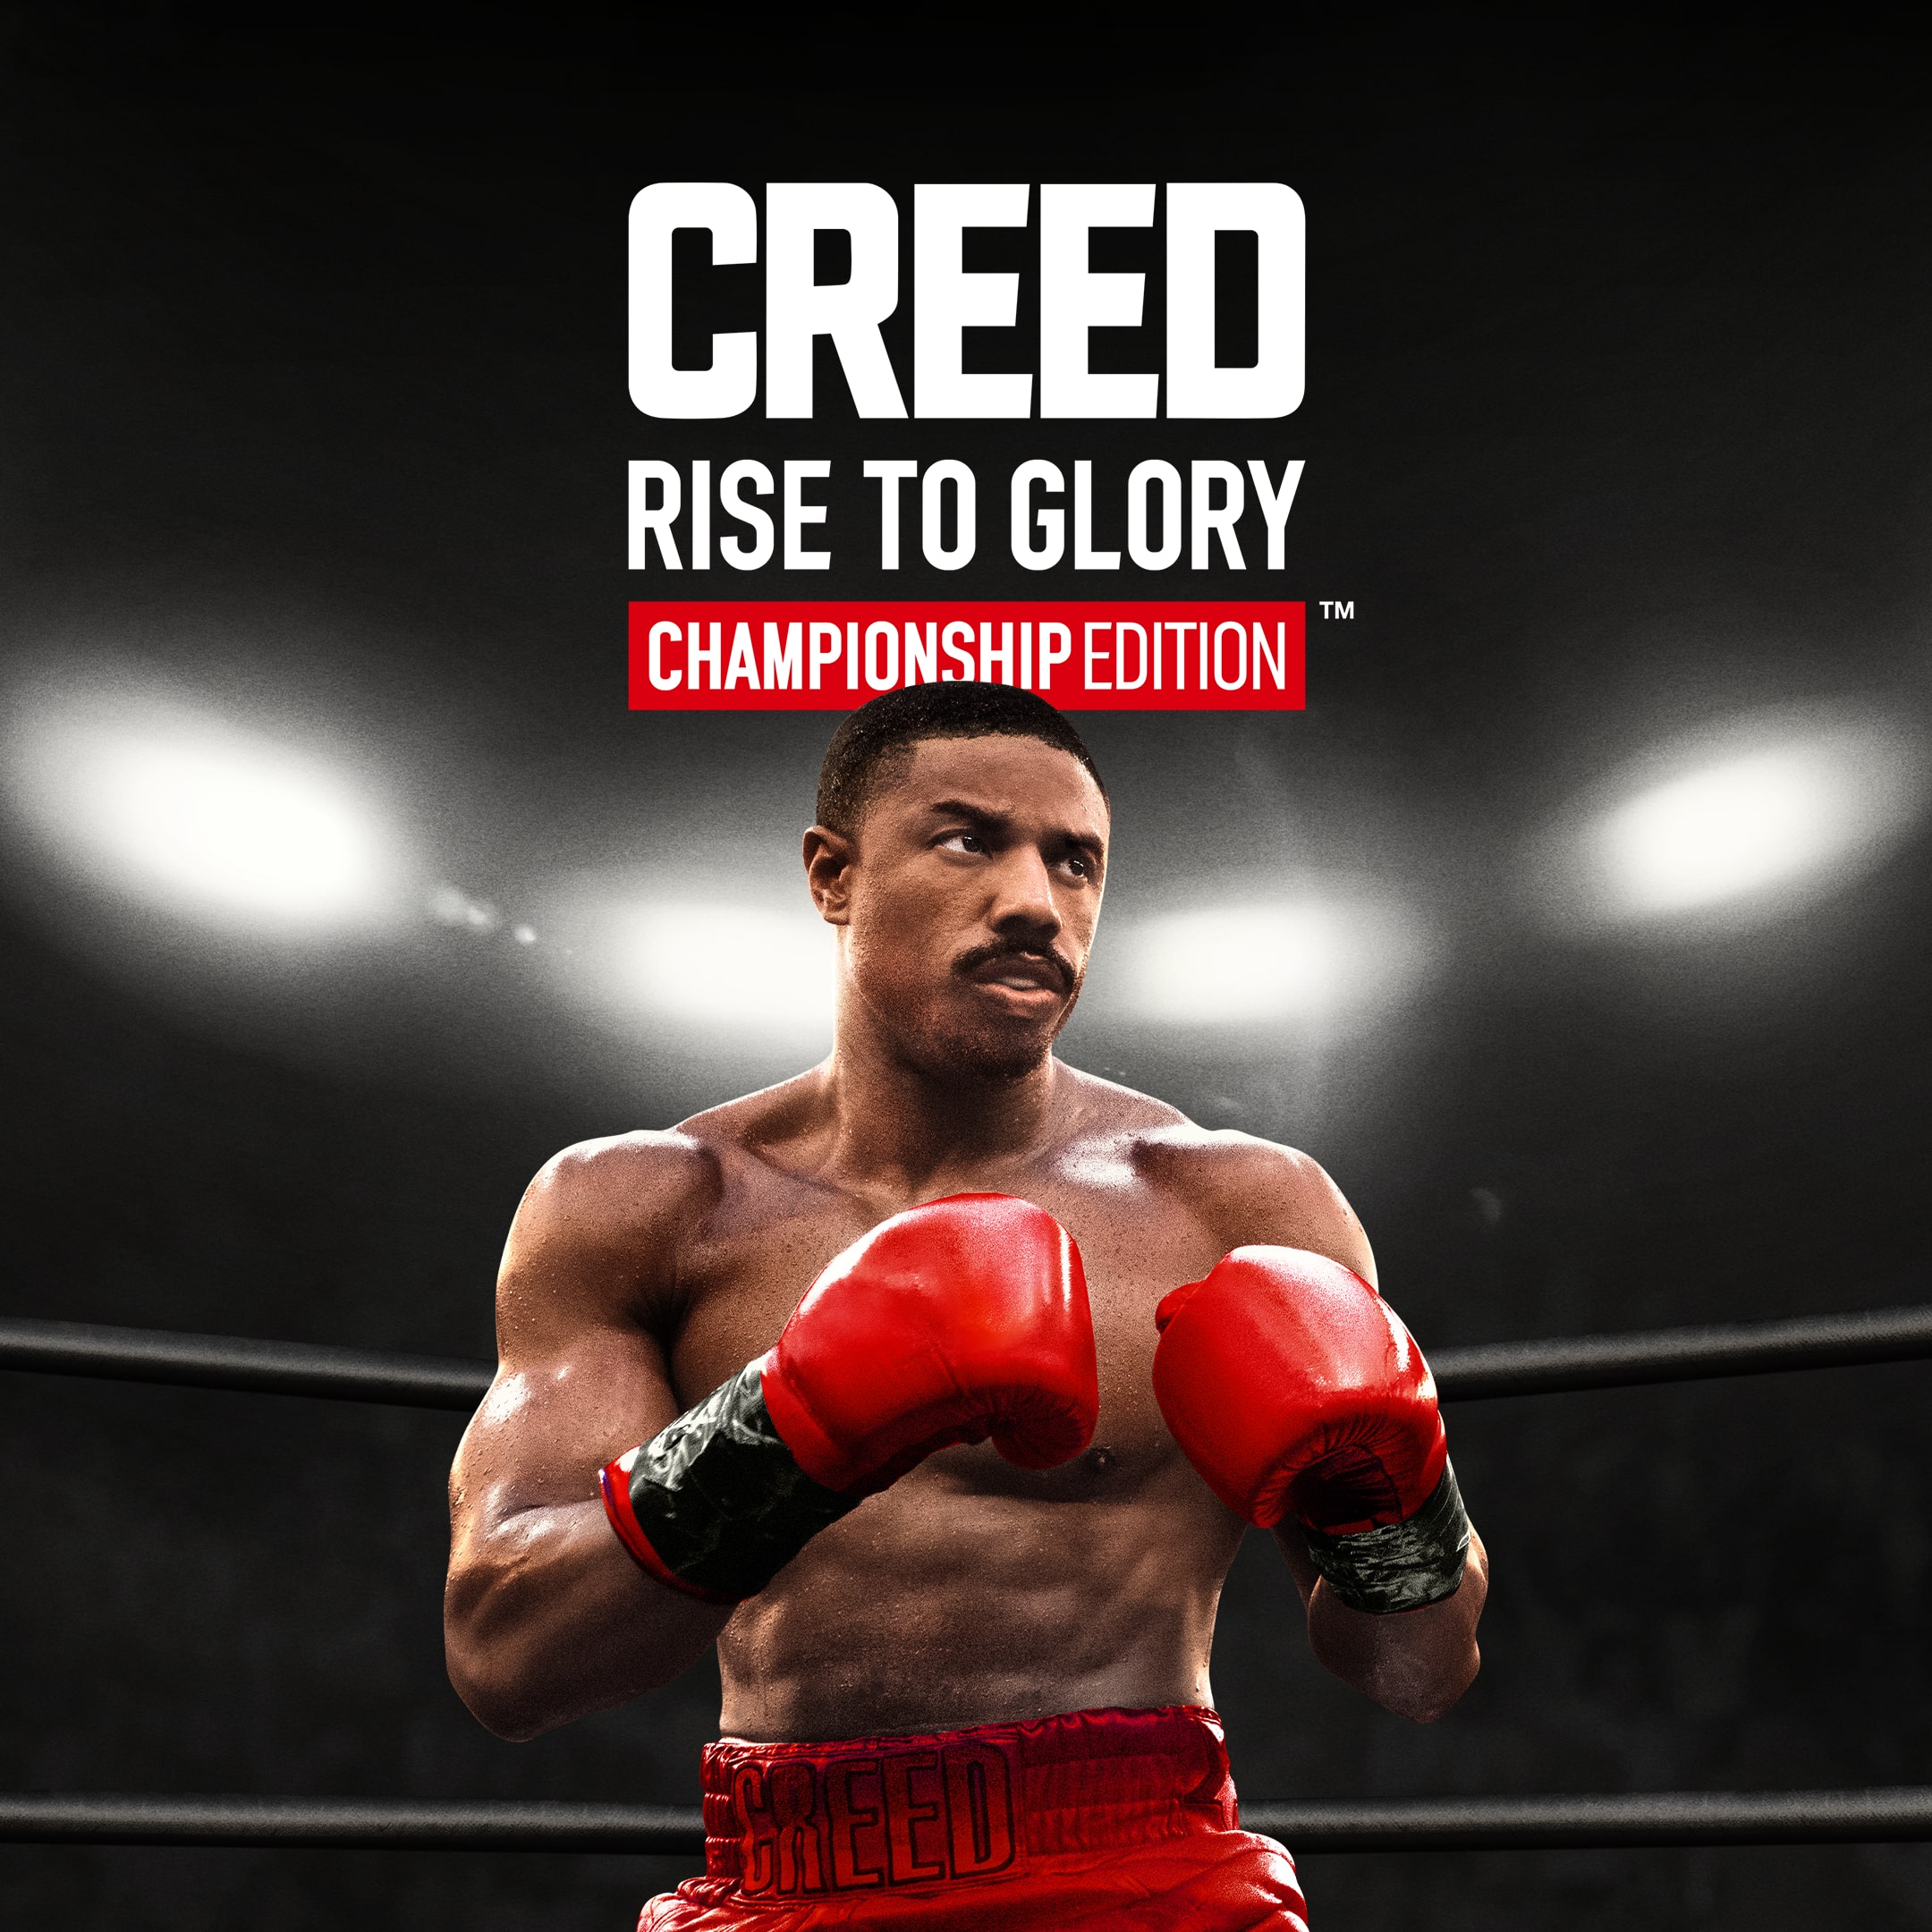 Rise to glory vr. Creed Rise to Glory. Creed: Rise to Glory - Championship Edition. Big Rumble Boxing: Creed Champions. Creed Rise to Glory VR.